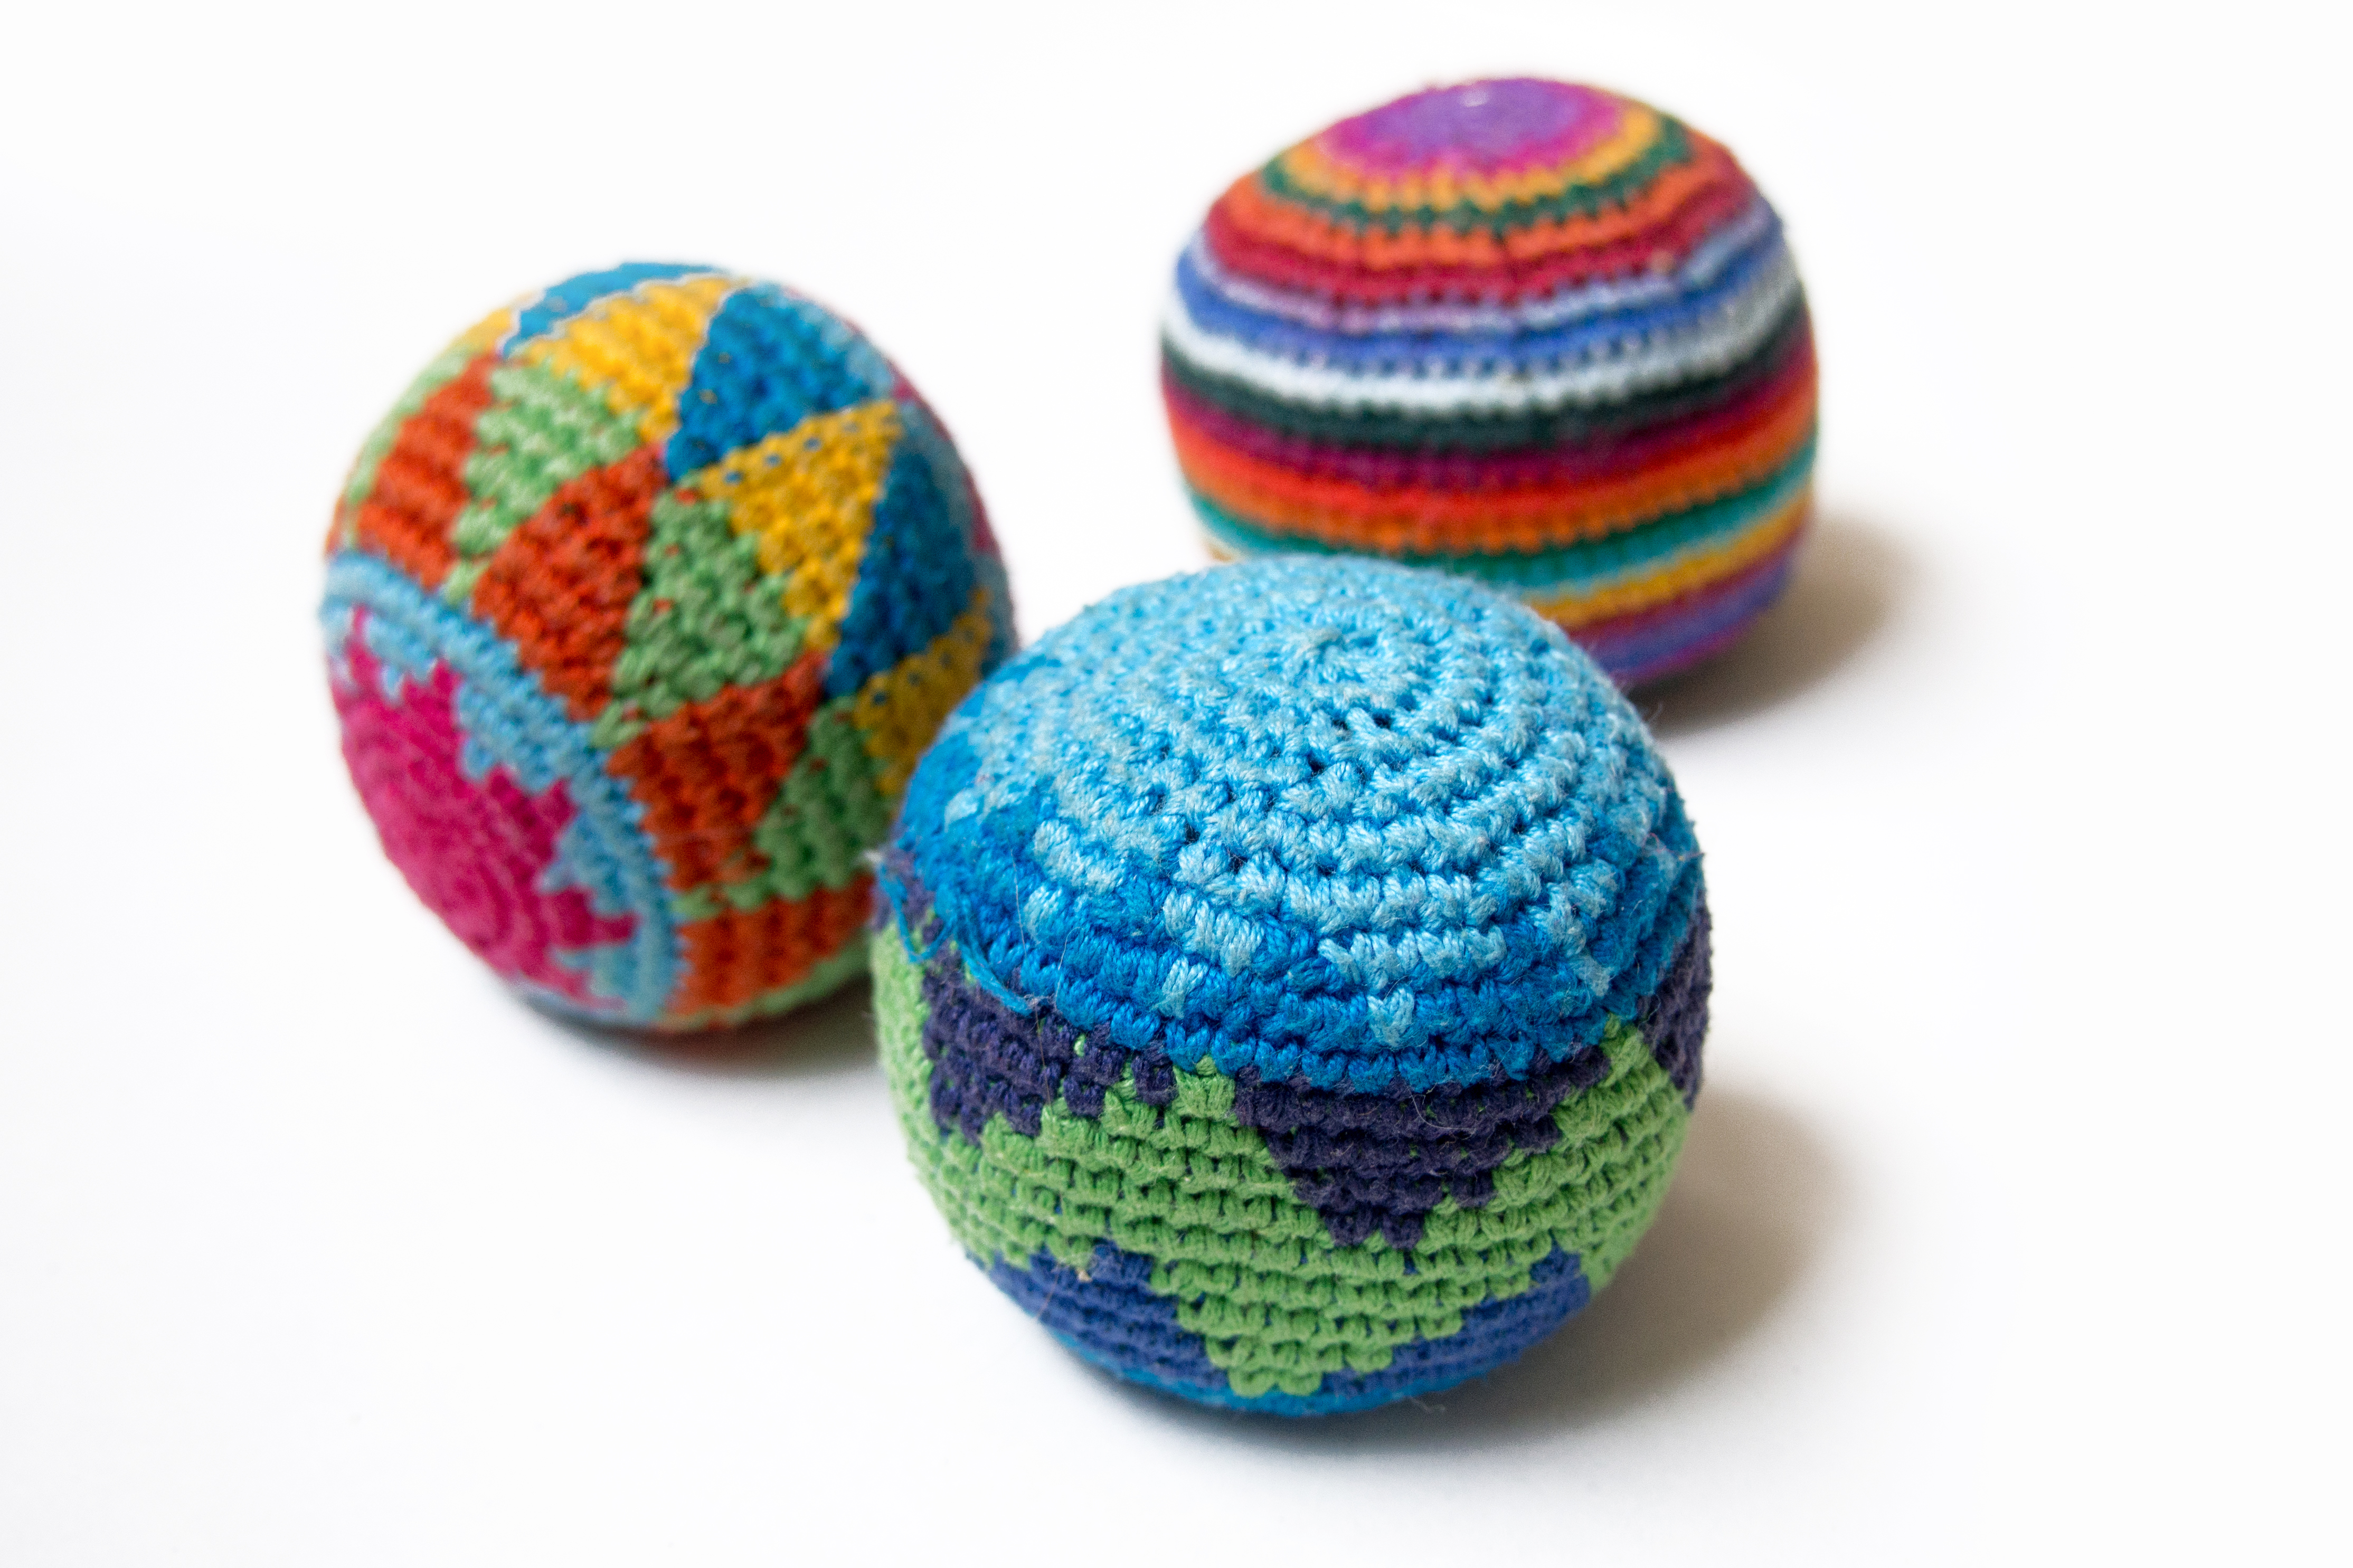 Three multi-colored juggling balls photo